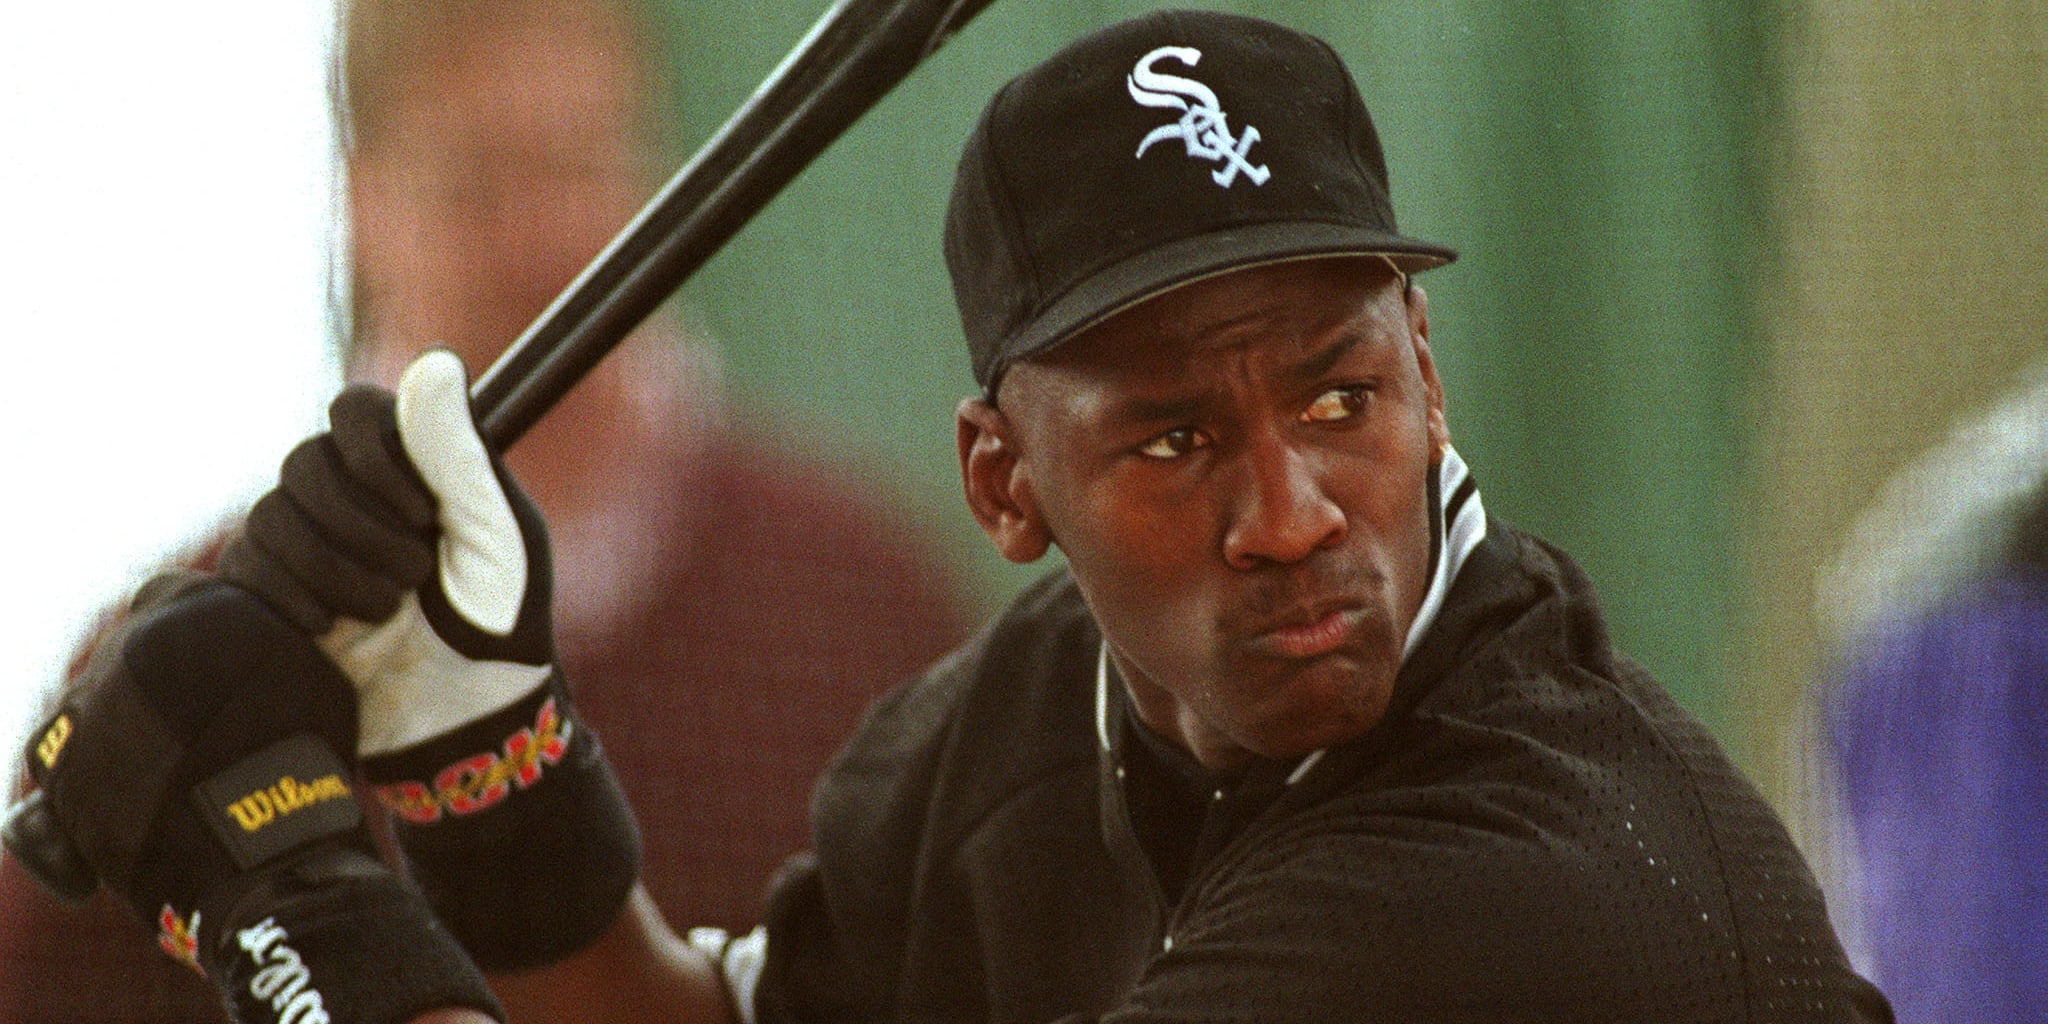 Michael Jordan Playing Baseball - Sports Illustrated